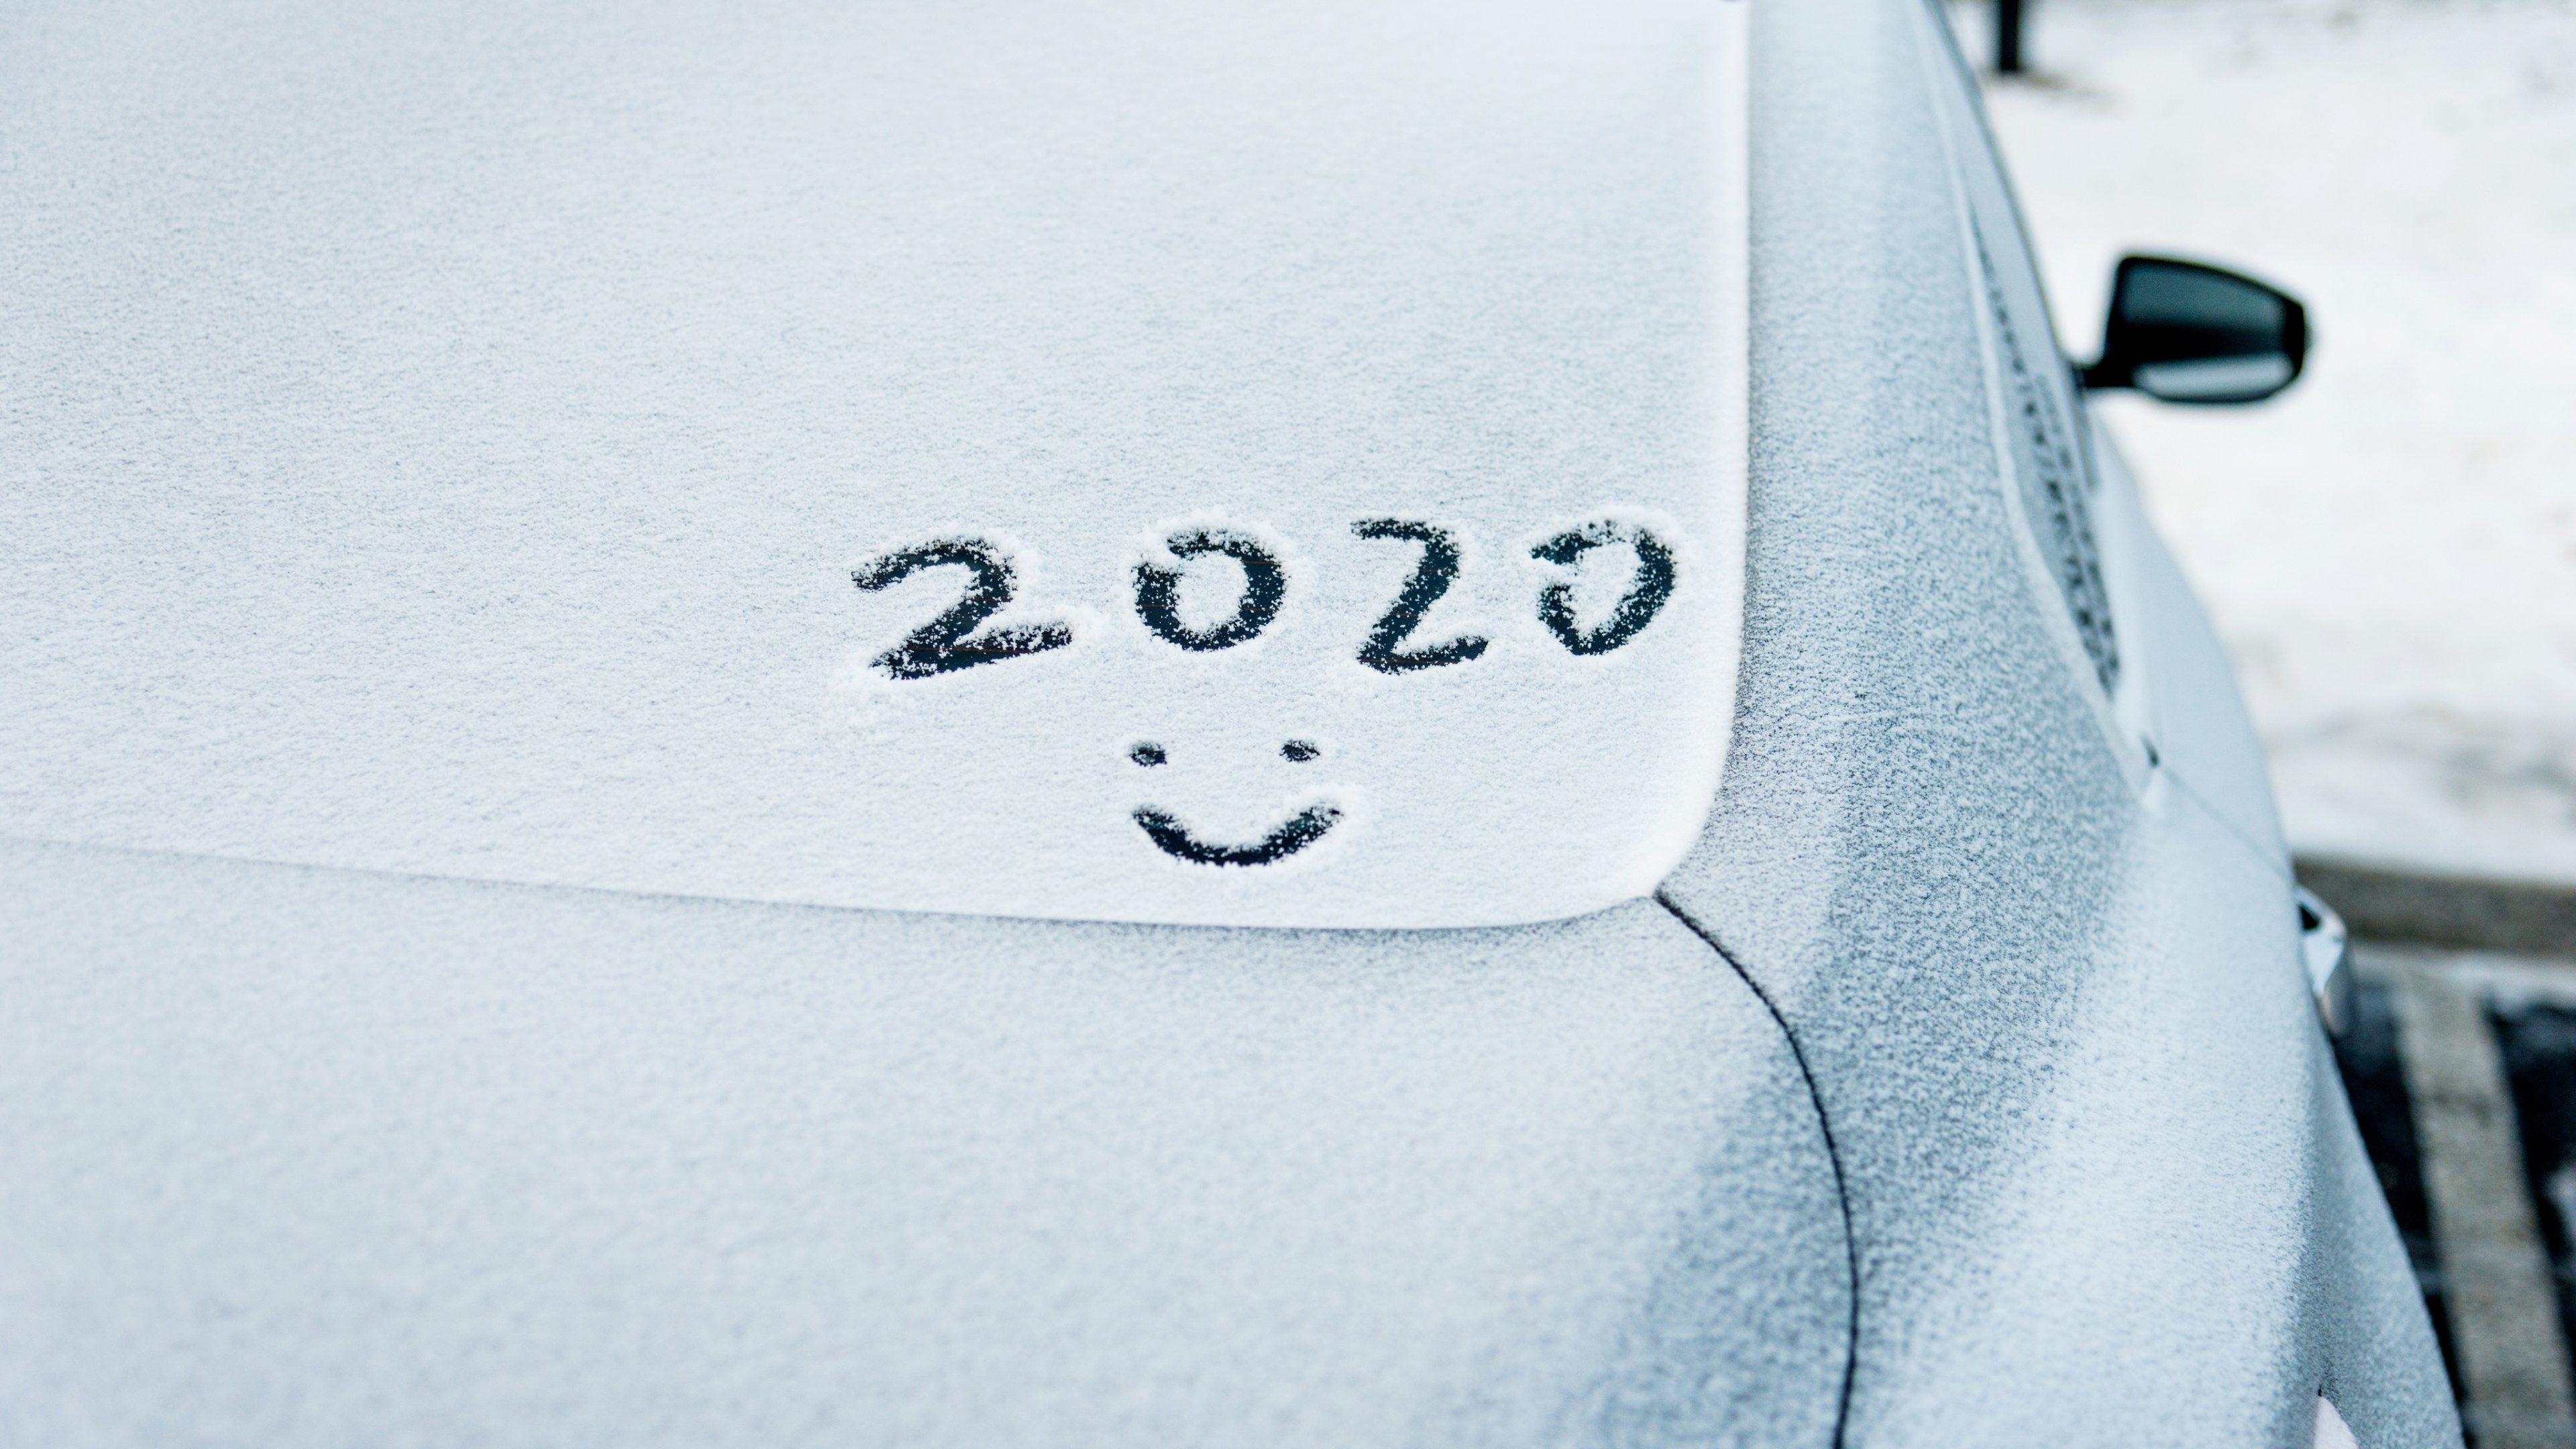 New year 2020 written on car windshield.